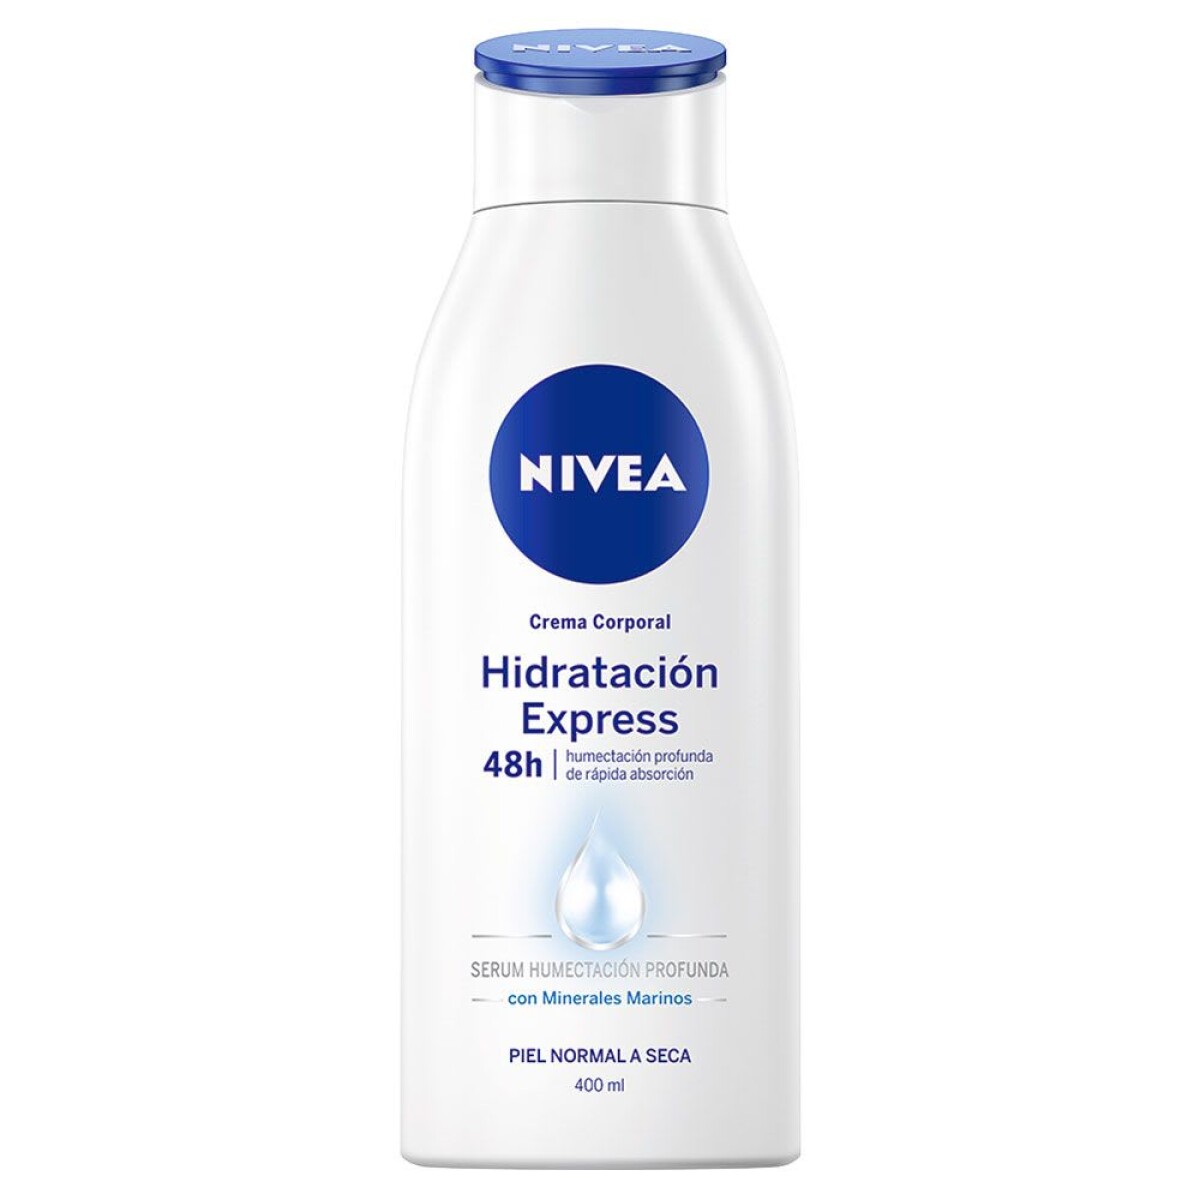 Crema Corporal NIVEA 250ml - Hidratación Express 